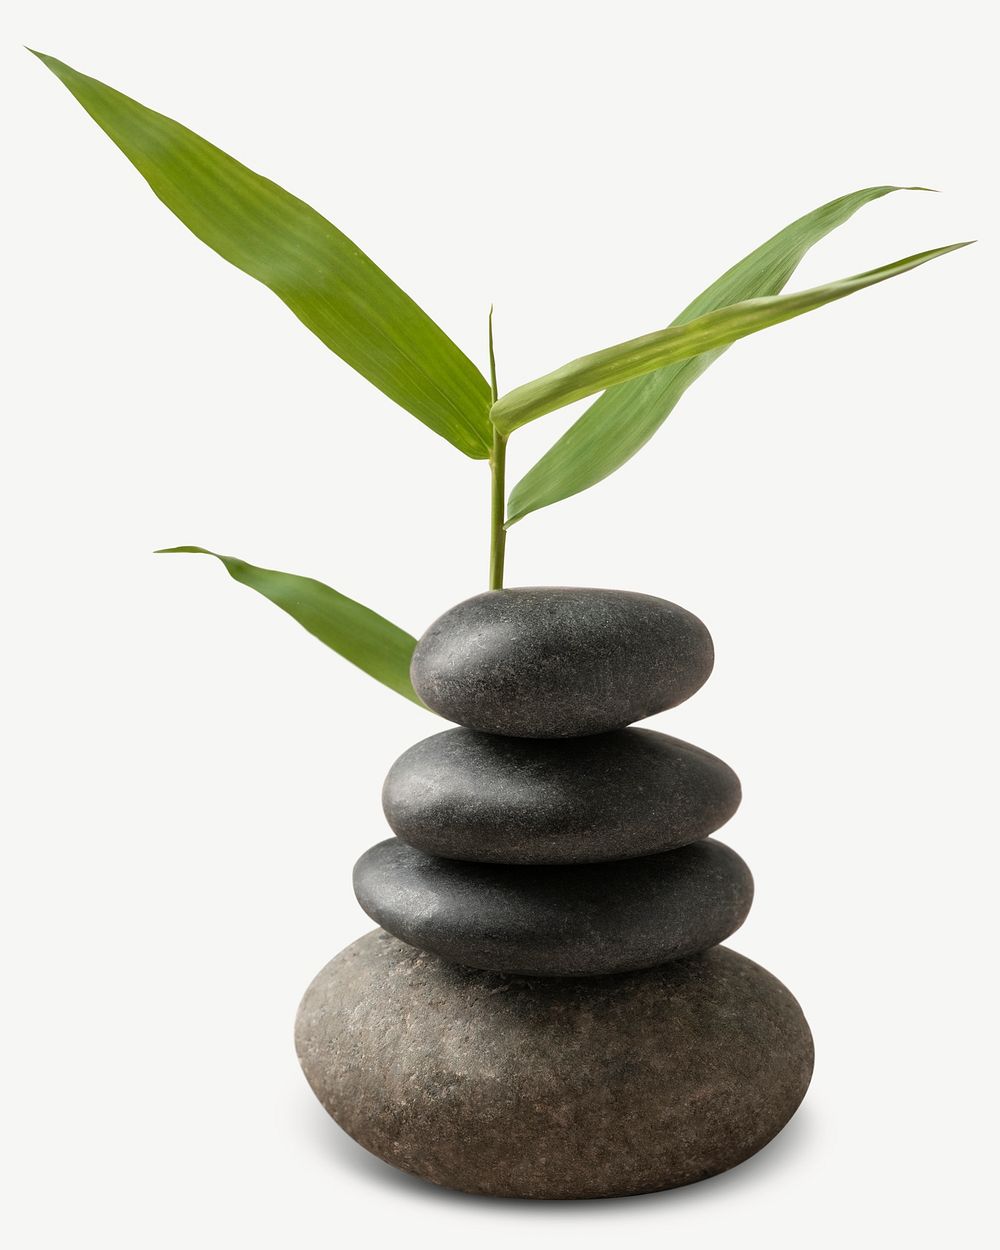 Zen stones & leaf collage element psd